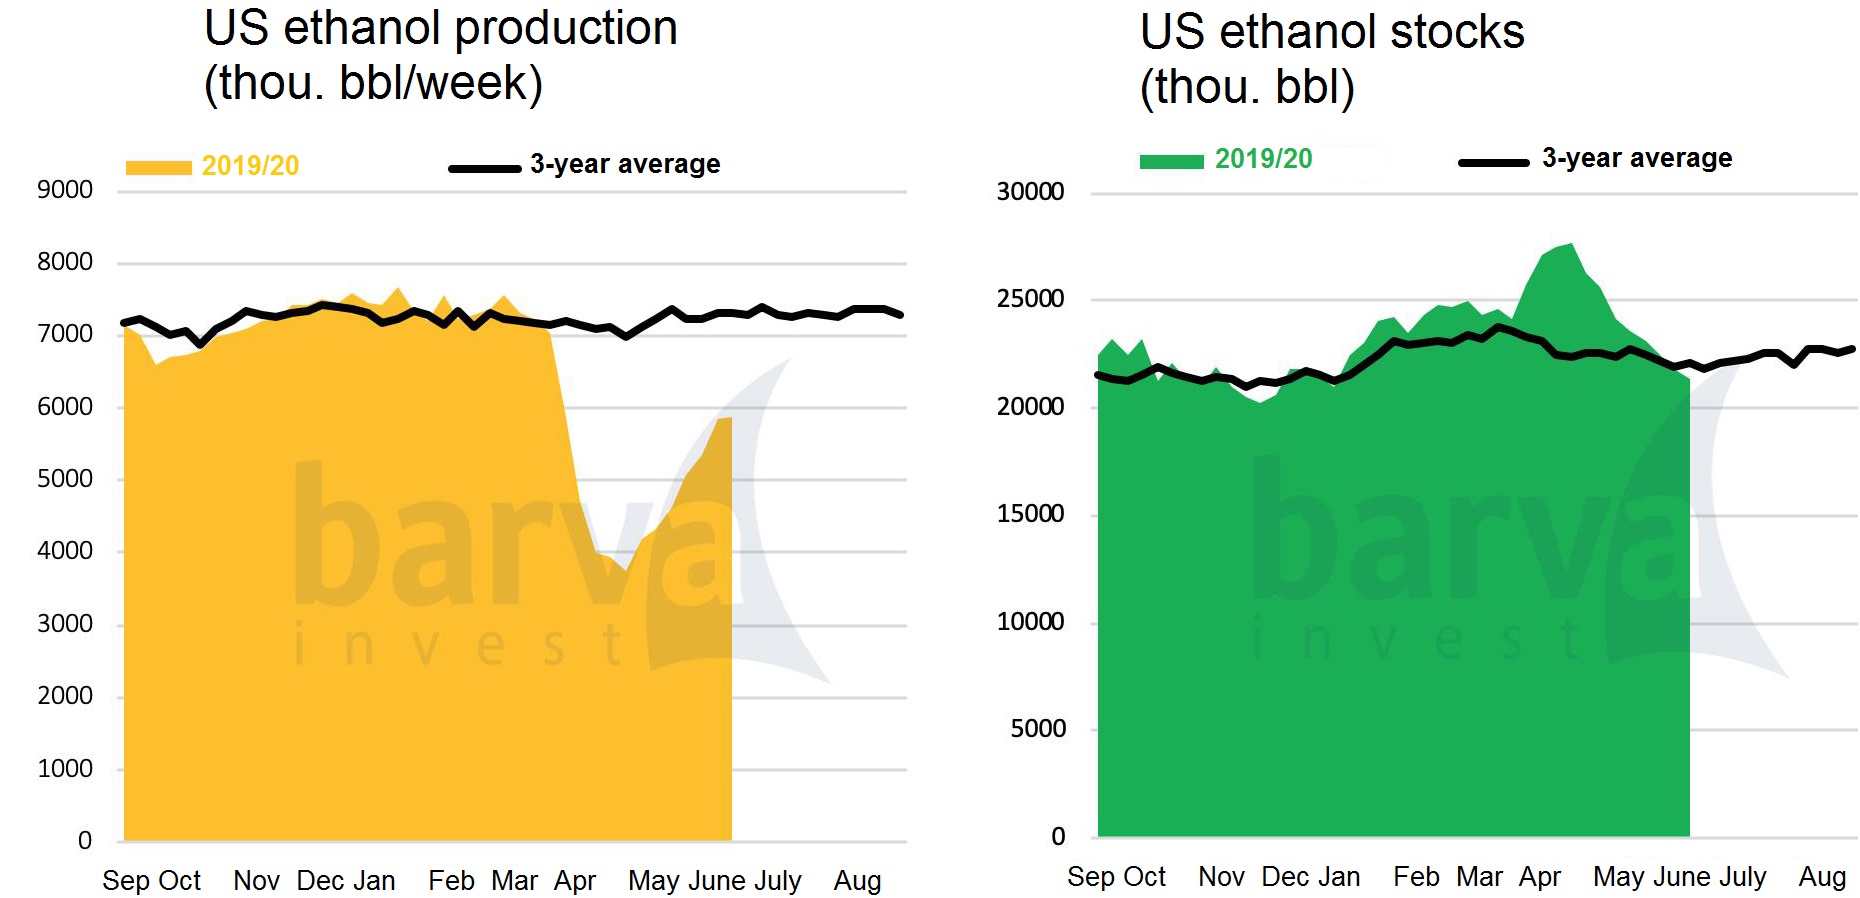 US ethanol production and stocks